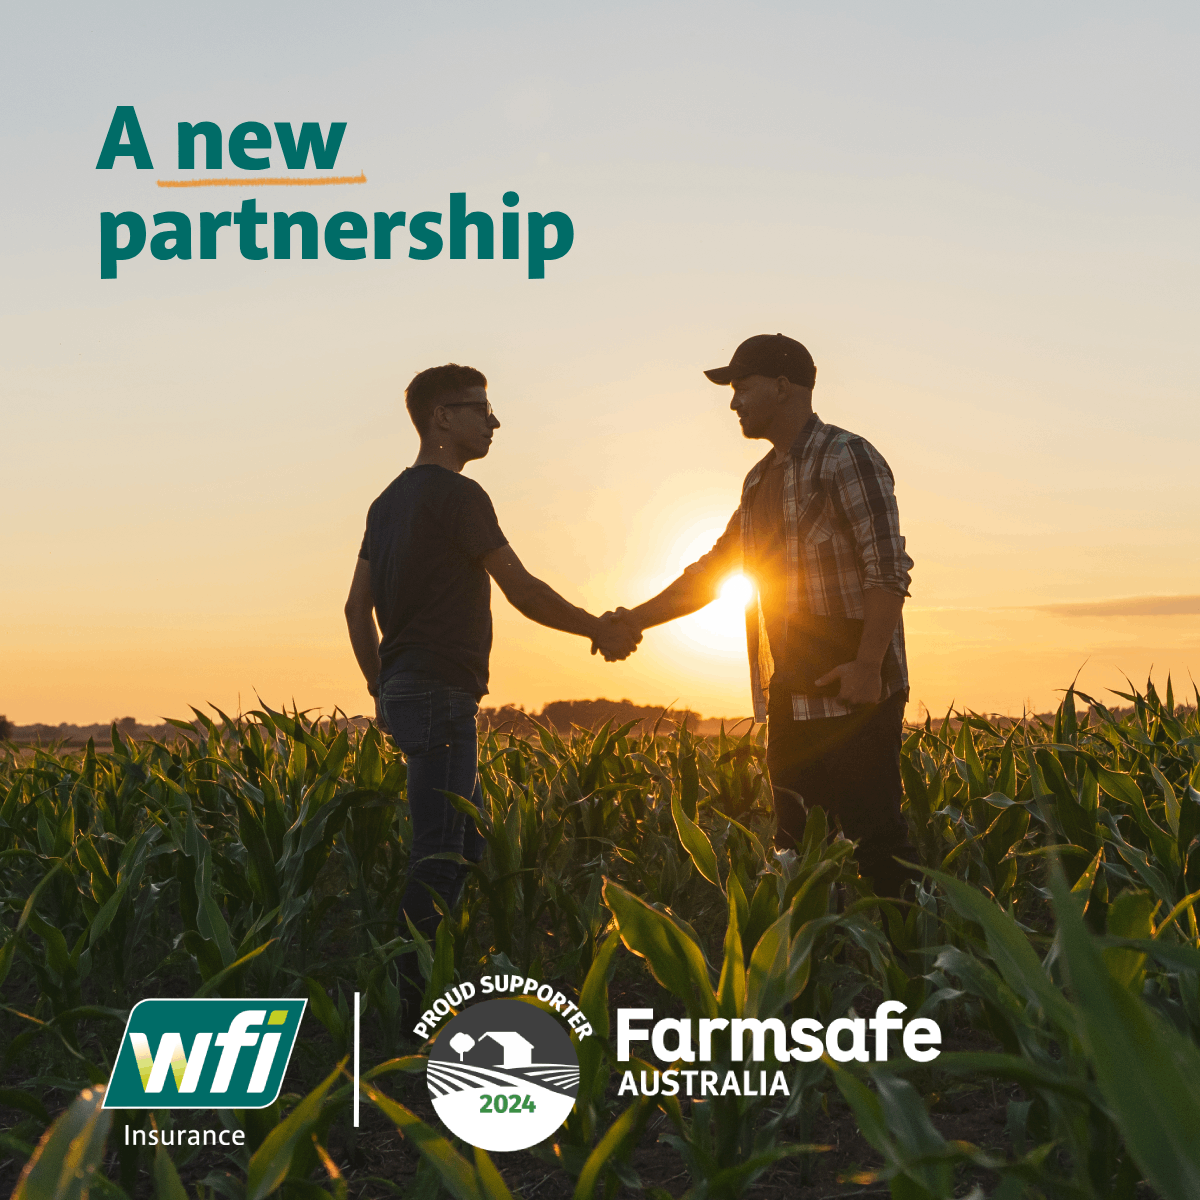 WFI partnership